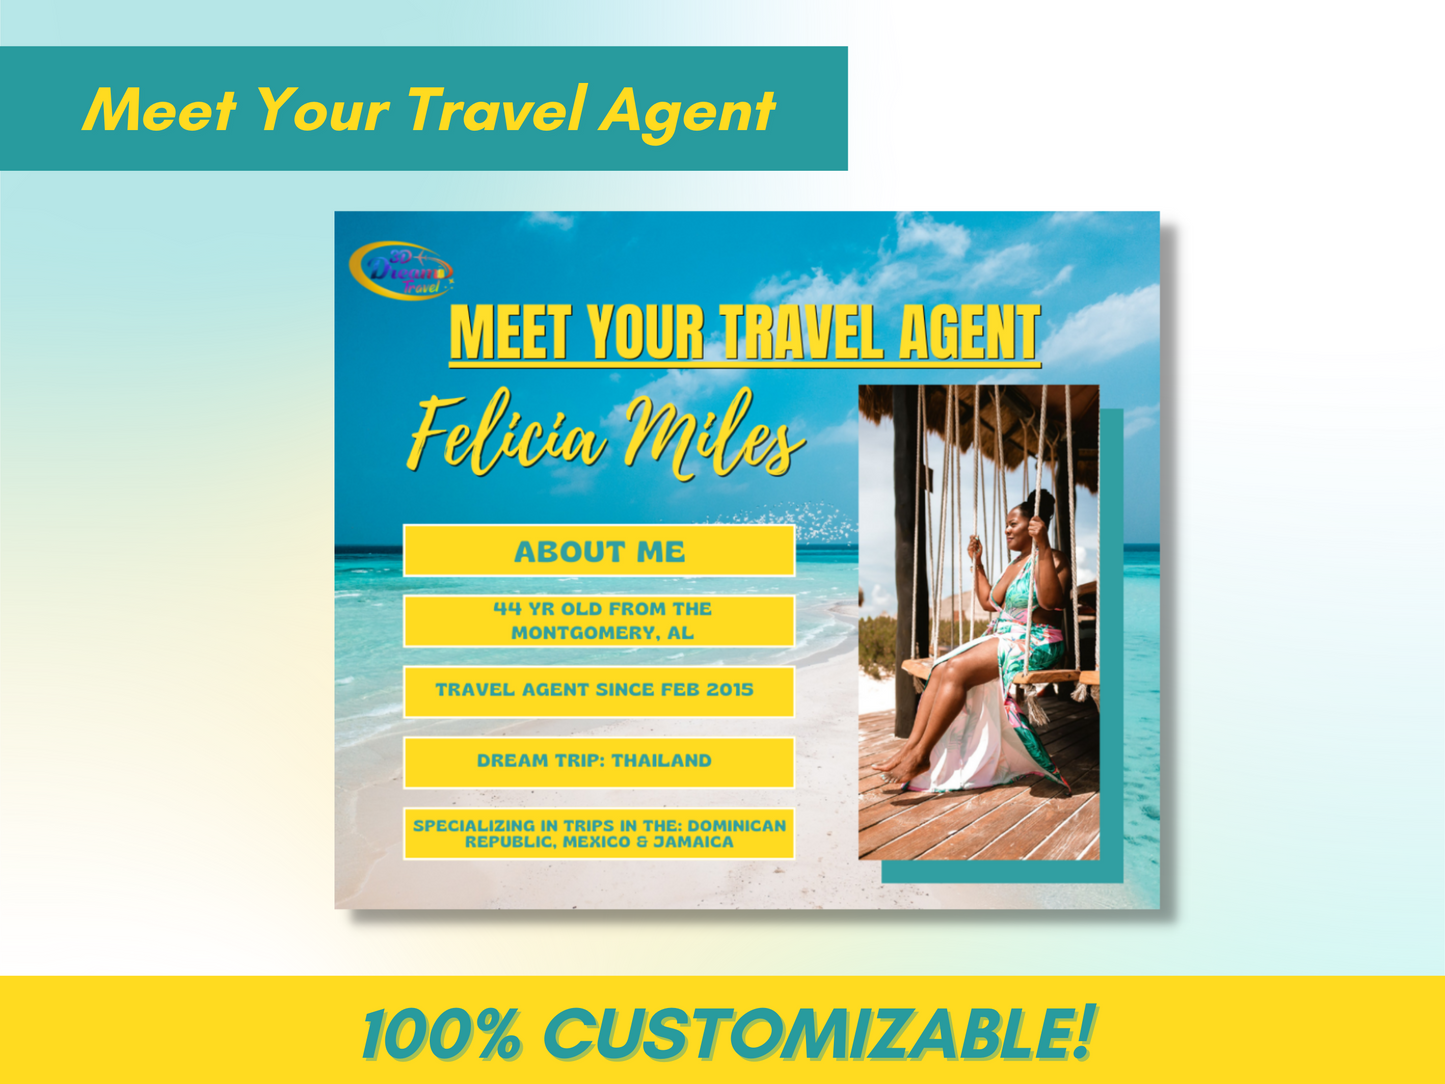 Travel Professional Branding Kit Set 2